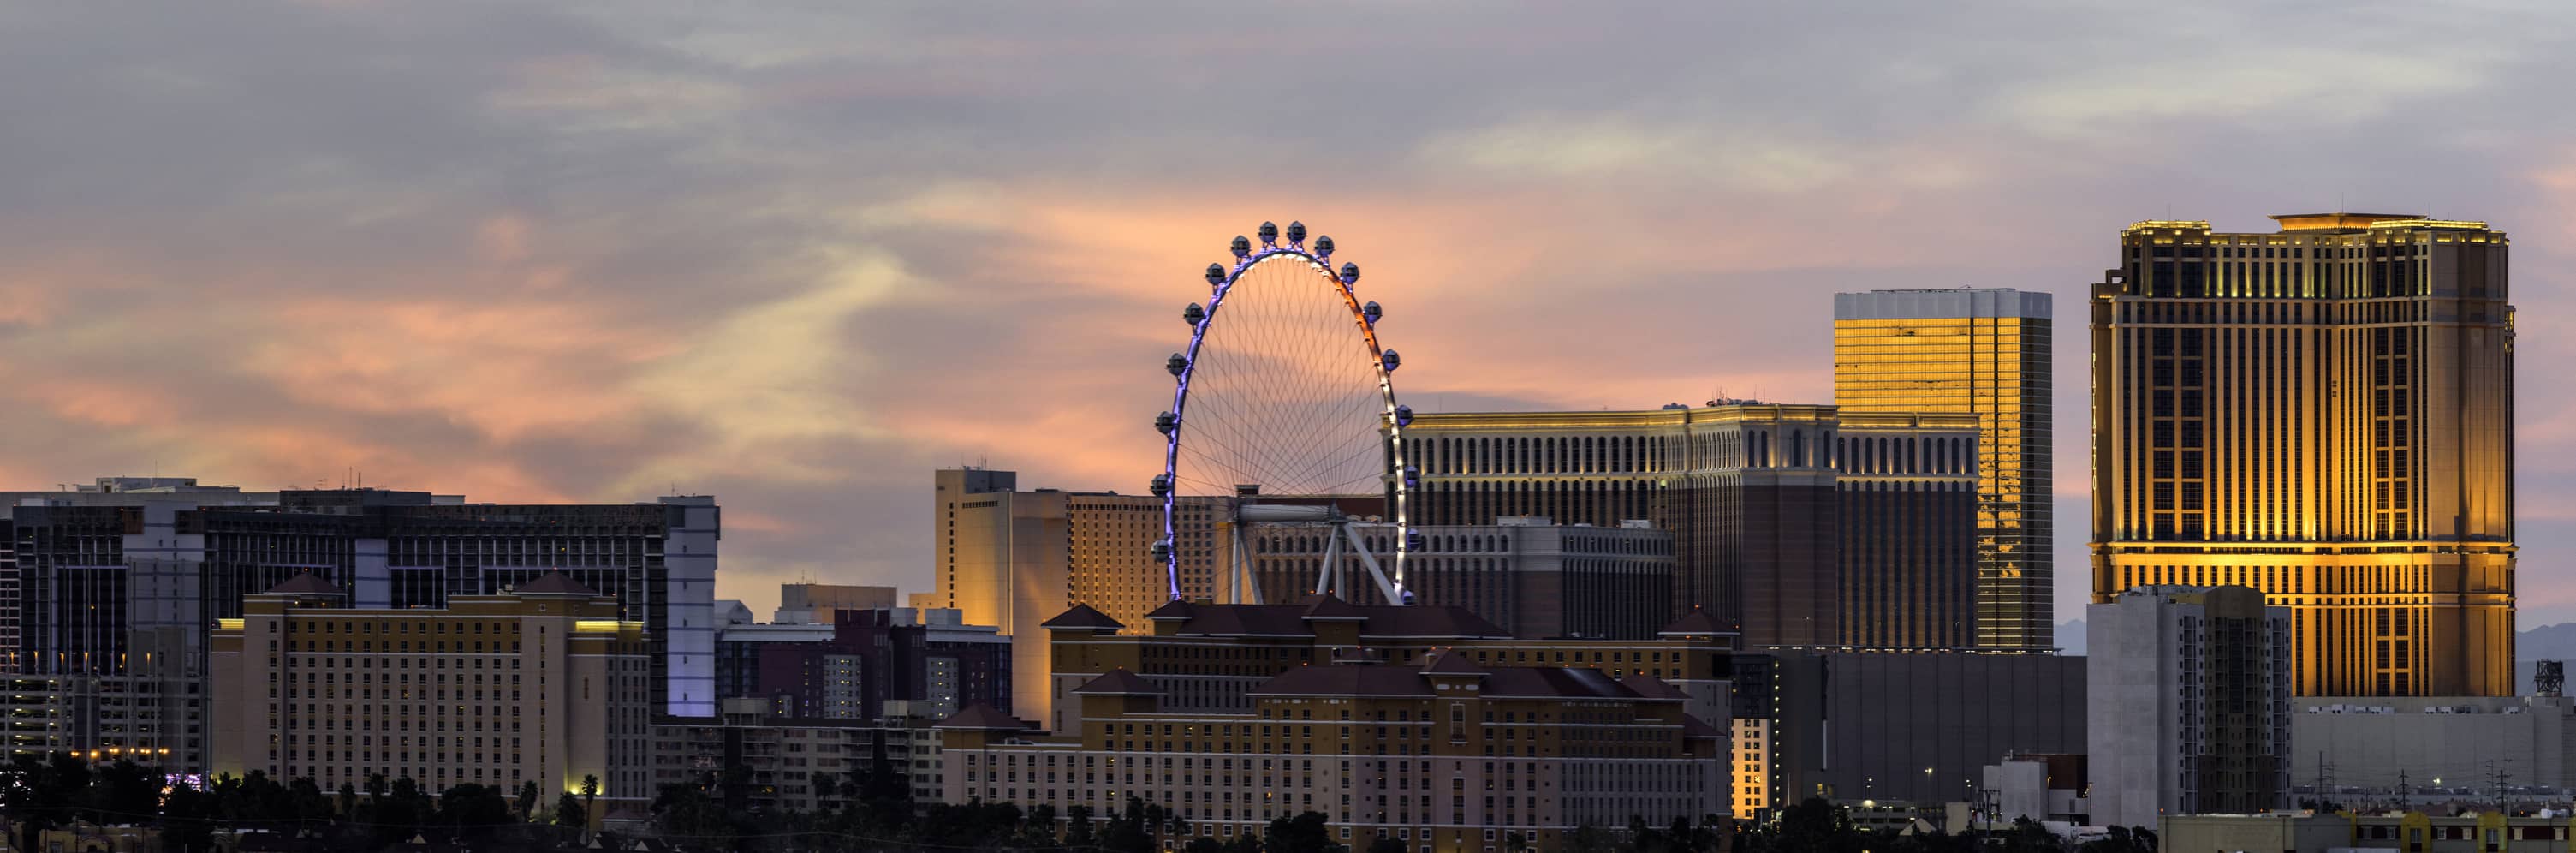 Las Vegas buildings at sunset